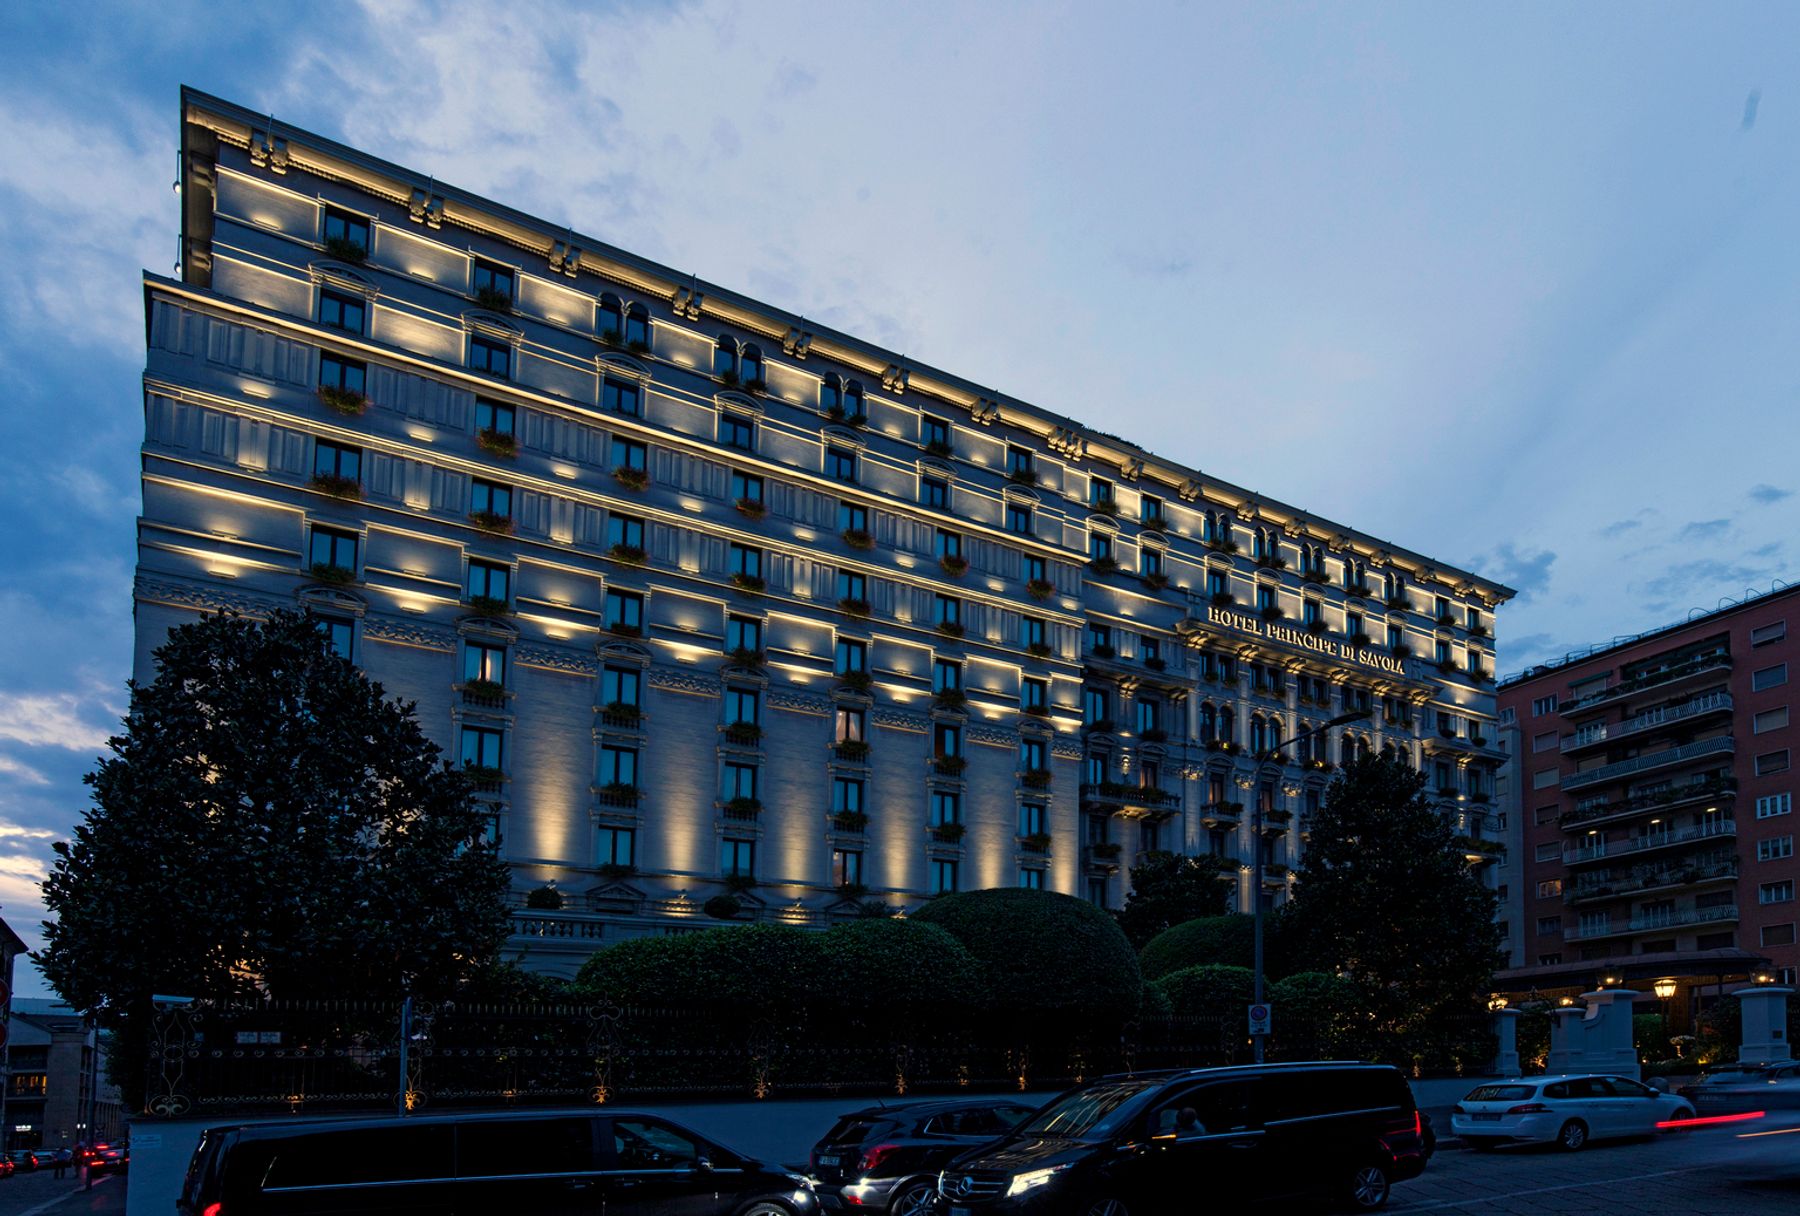 Hotel Principe di Savoia, Milano. Arkitektur: Cesare Tenca. Ljusplanering: Marco Nereo Rotelli, Milano Foto: Dirk Vogel, Altena.